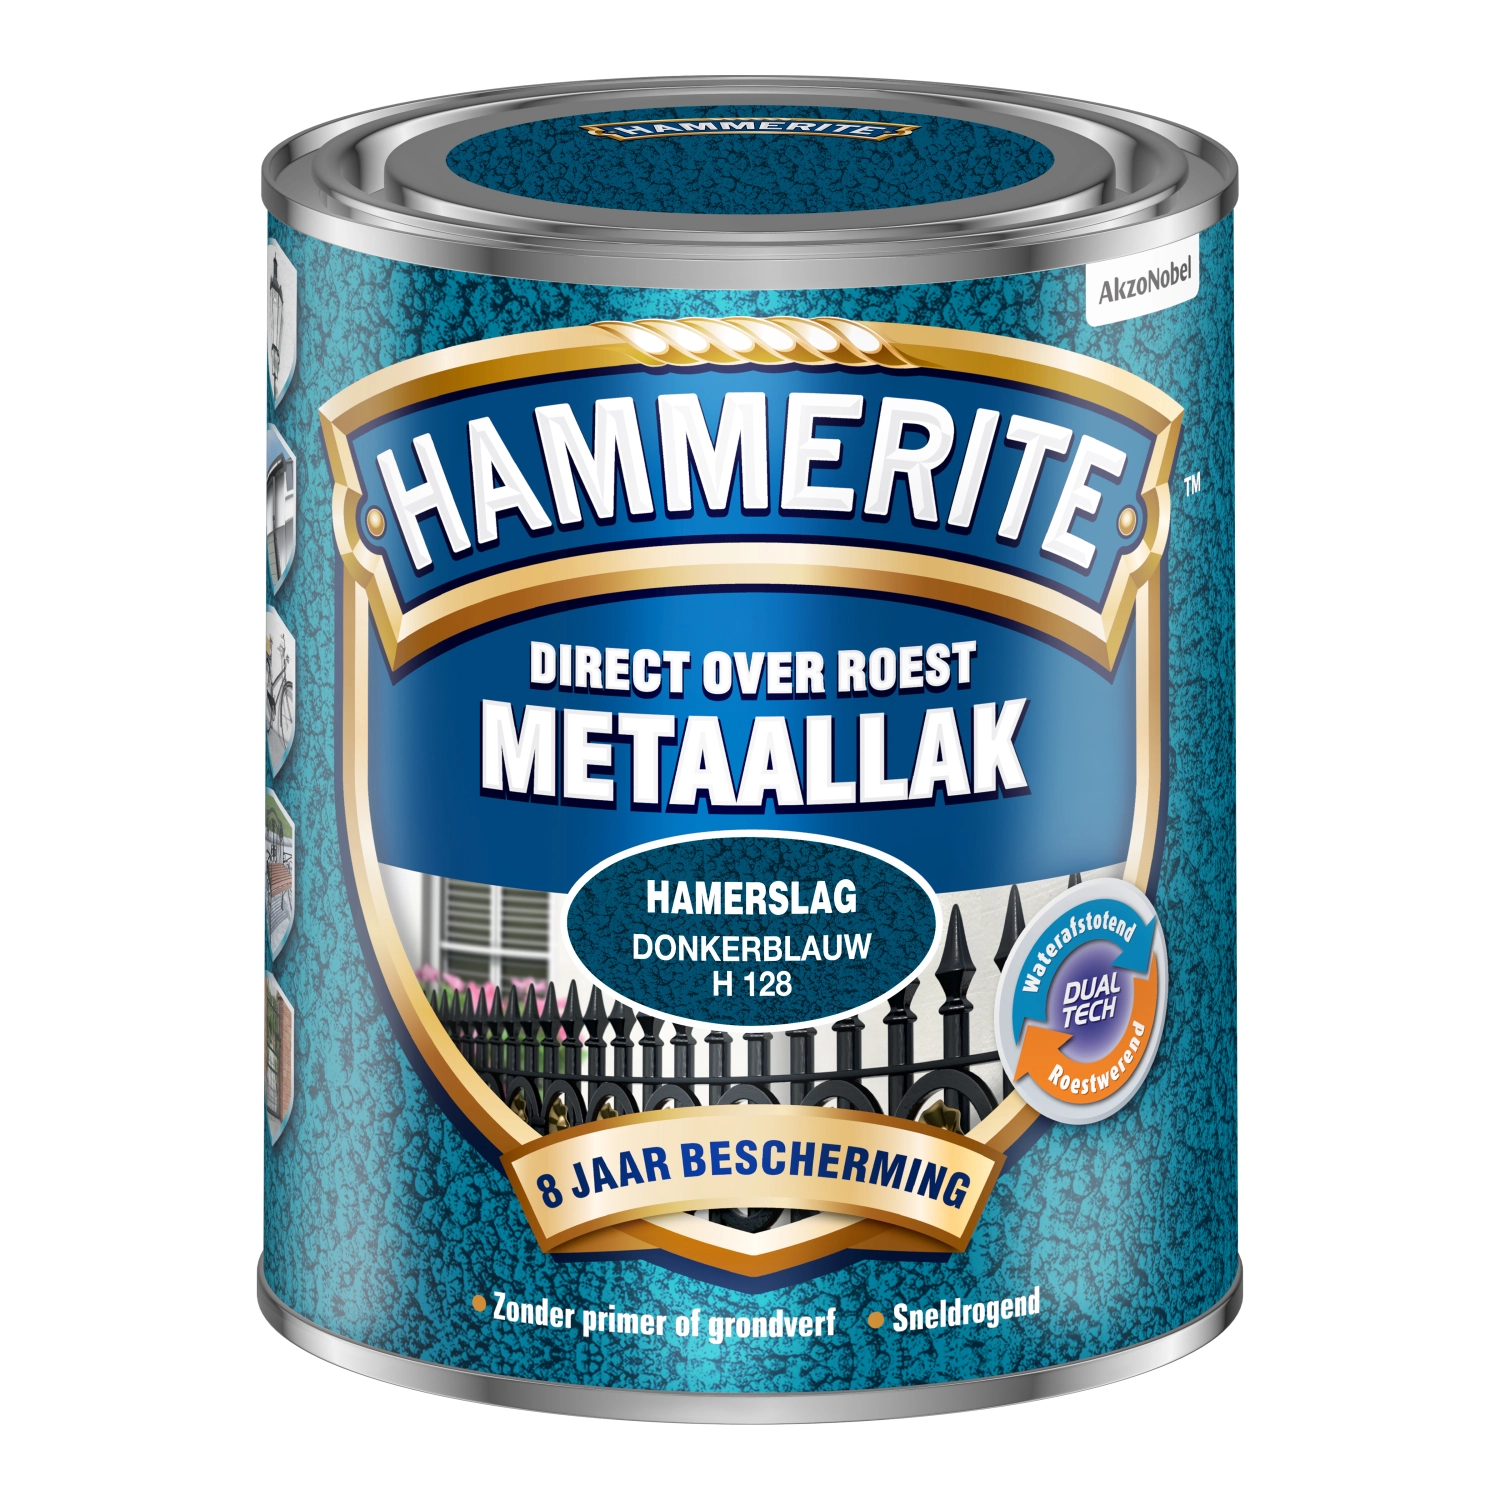 Hammerite Hamerslaglak - Donkerblauw - 750ml-image